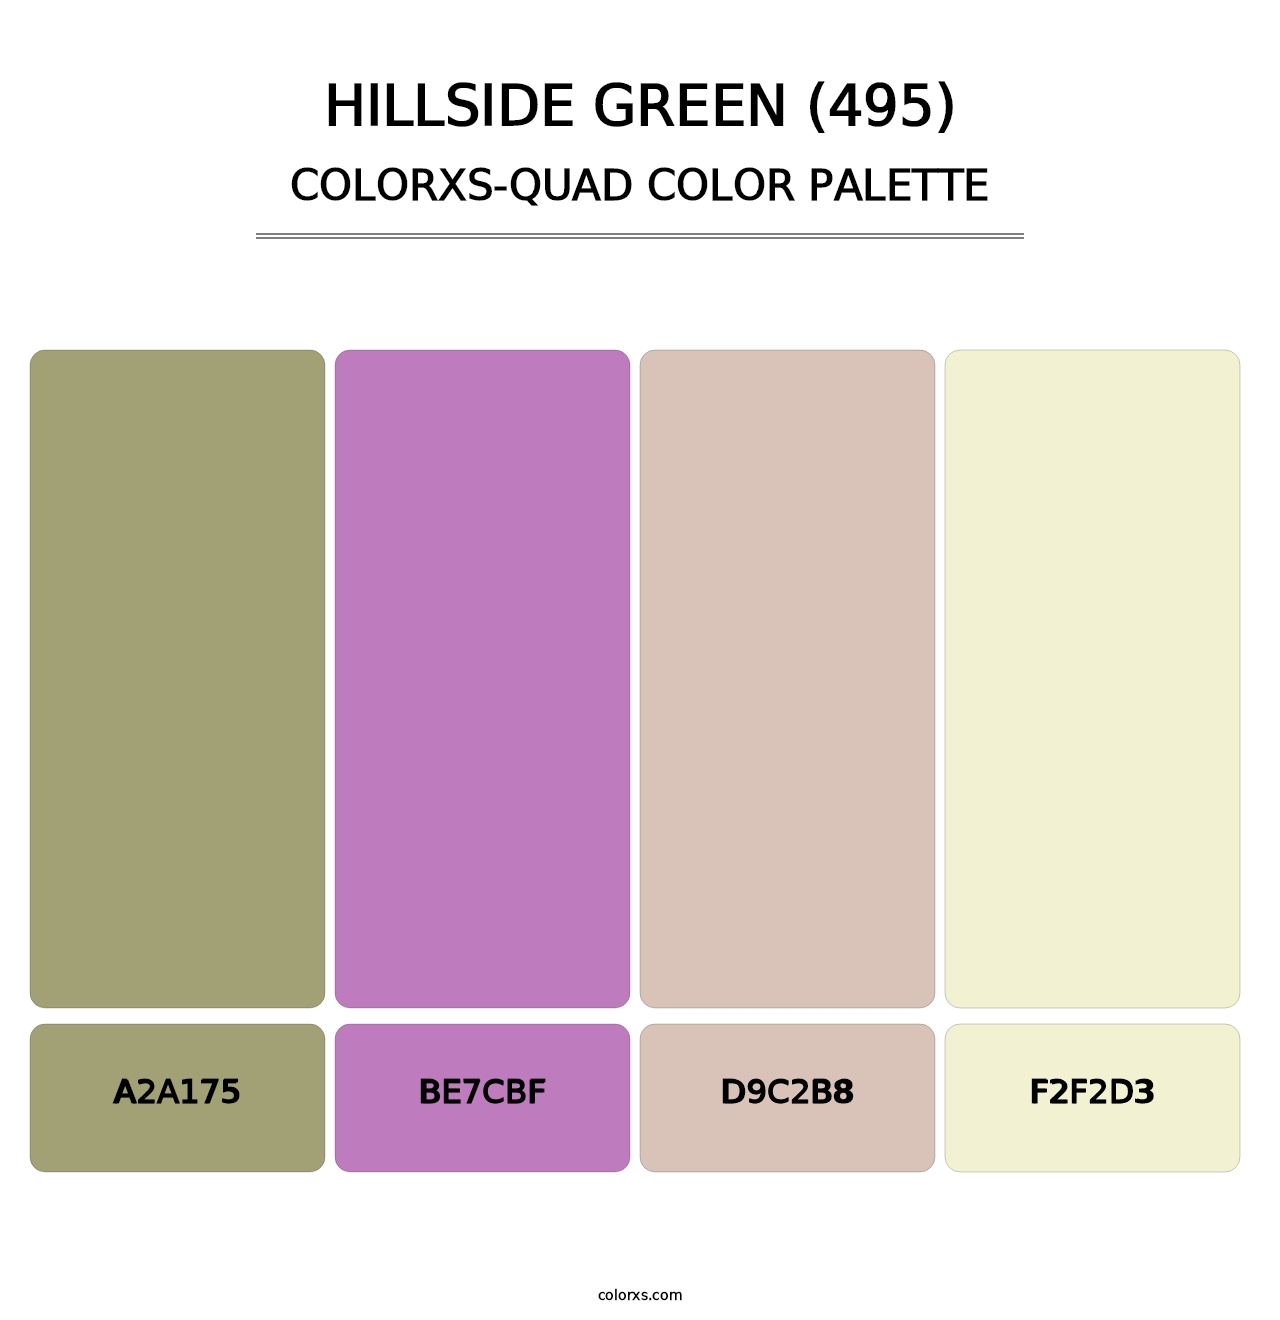 Hillside Green (495) - Colorxs Quad Palette